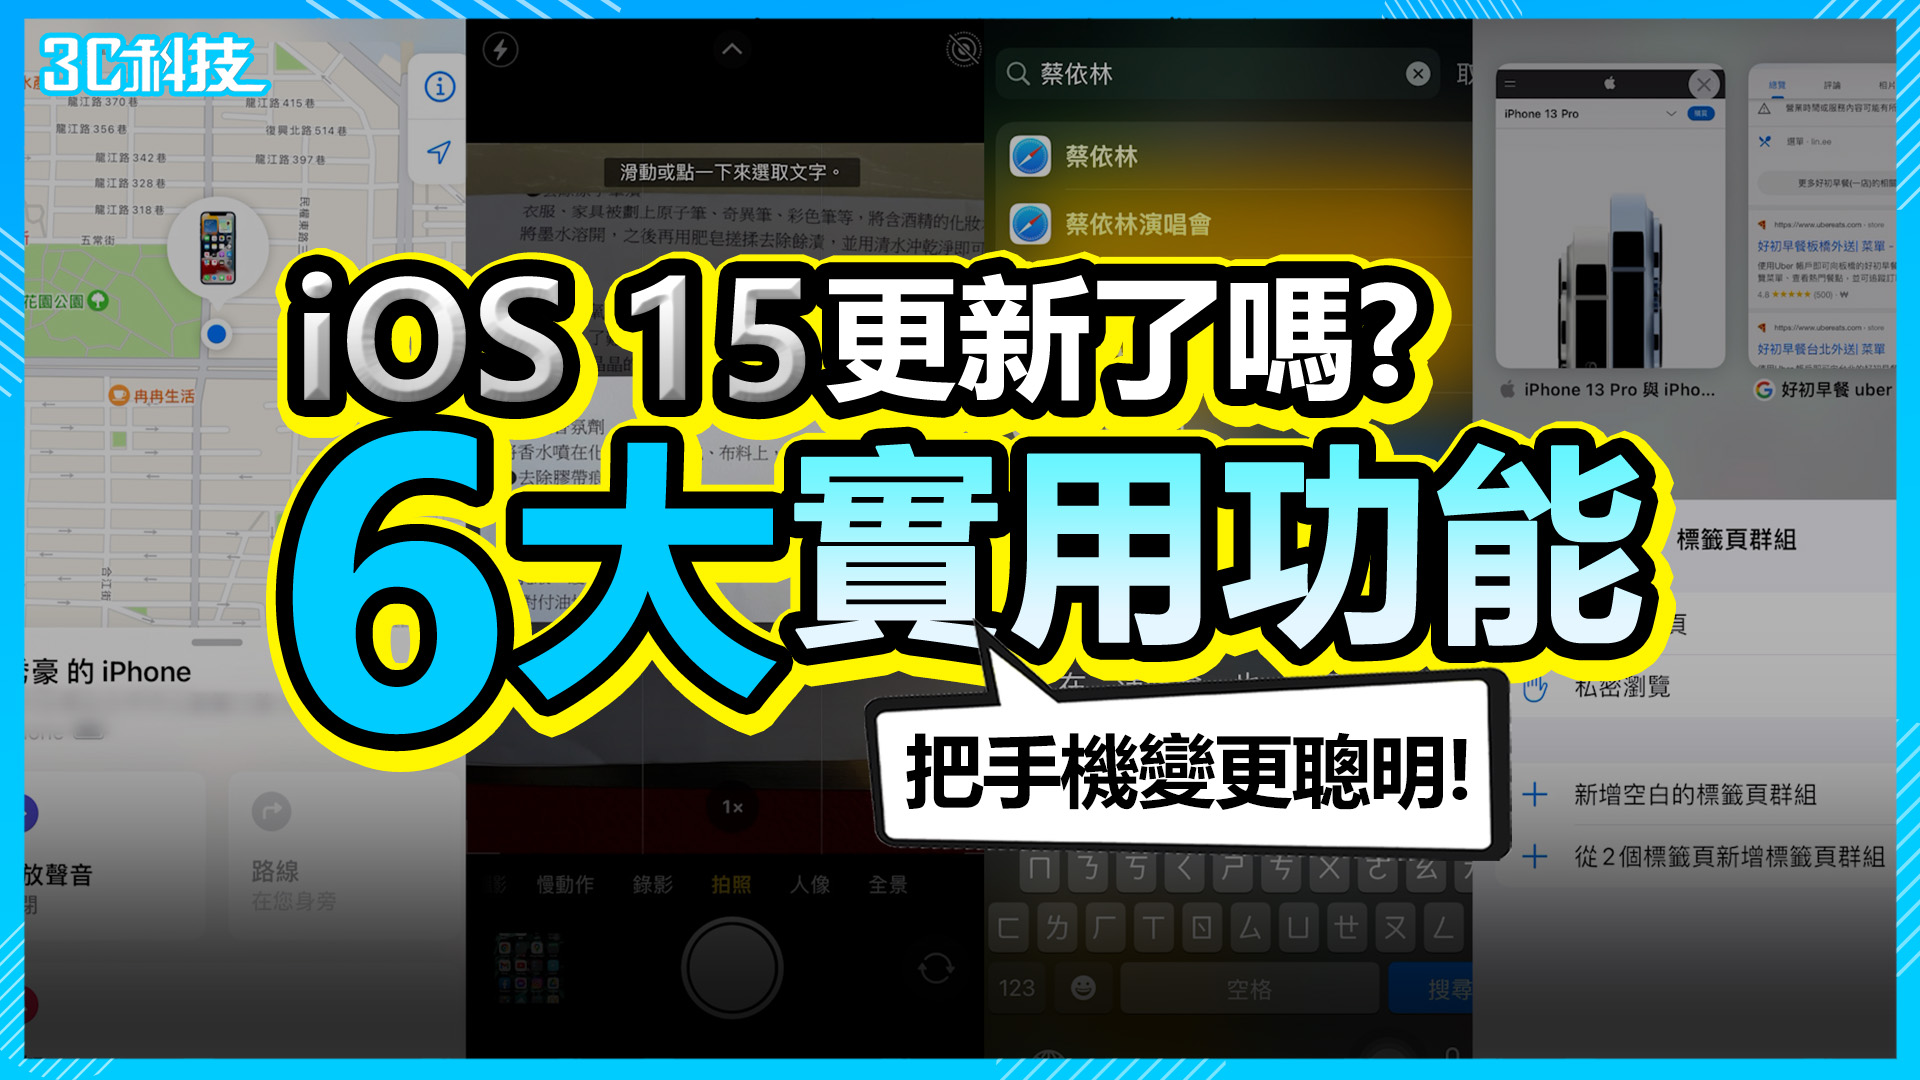 iOS 15 更新了嗎？ iPhone 6 大全新實用功能快學好學滿